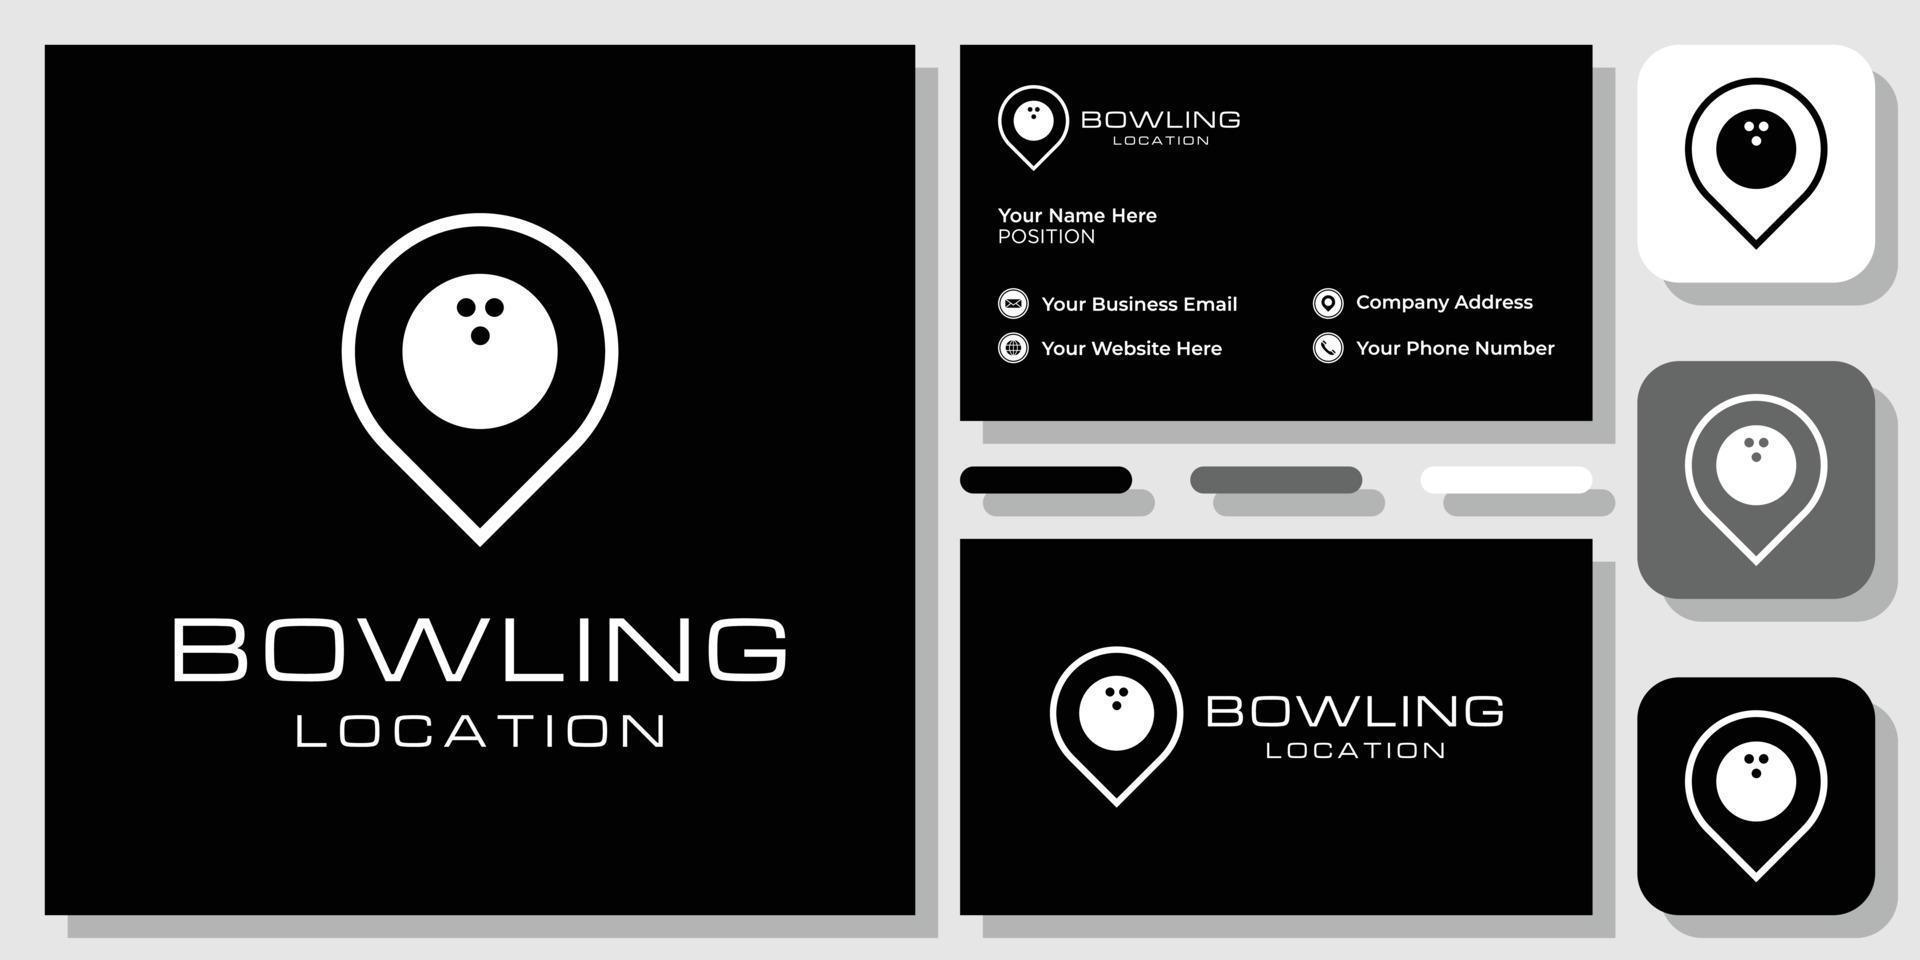 Bowling-Standortsymbol Platzspiel-Hobby-Aktivität mit Visitenkartenvorlage vektor